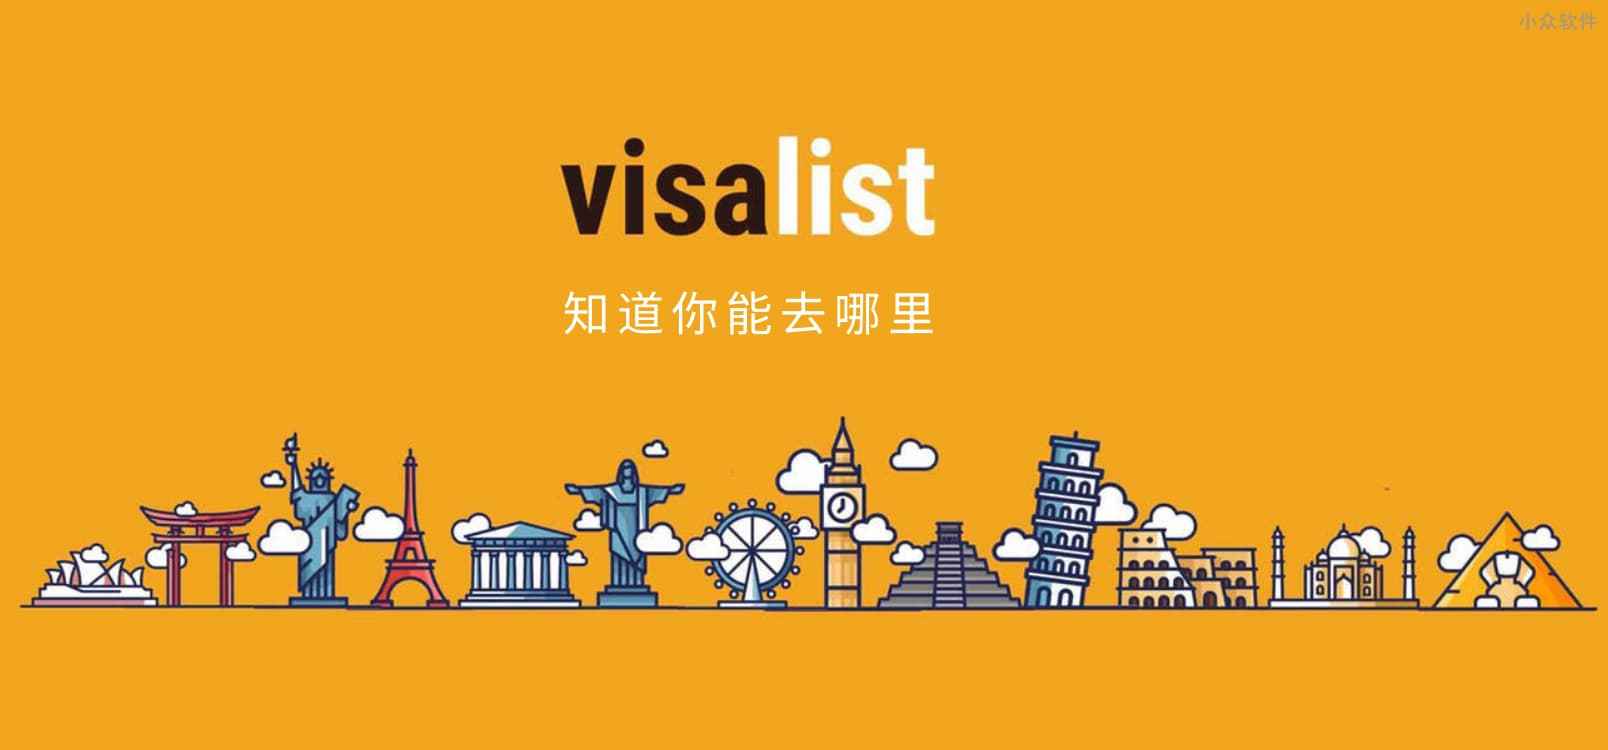 VisaList – 旅行者全球签证指南，适用于中国 [Web]